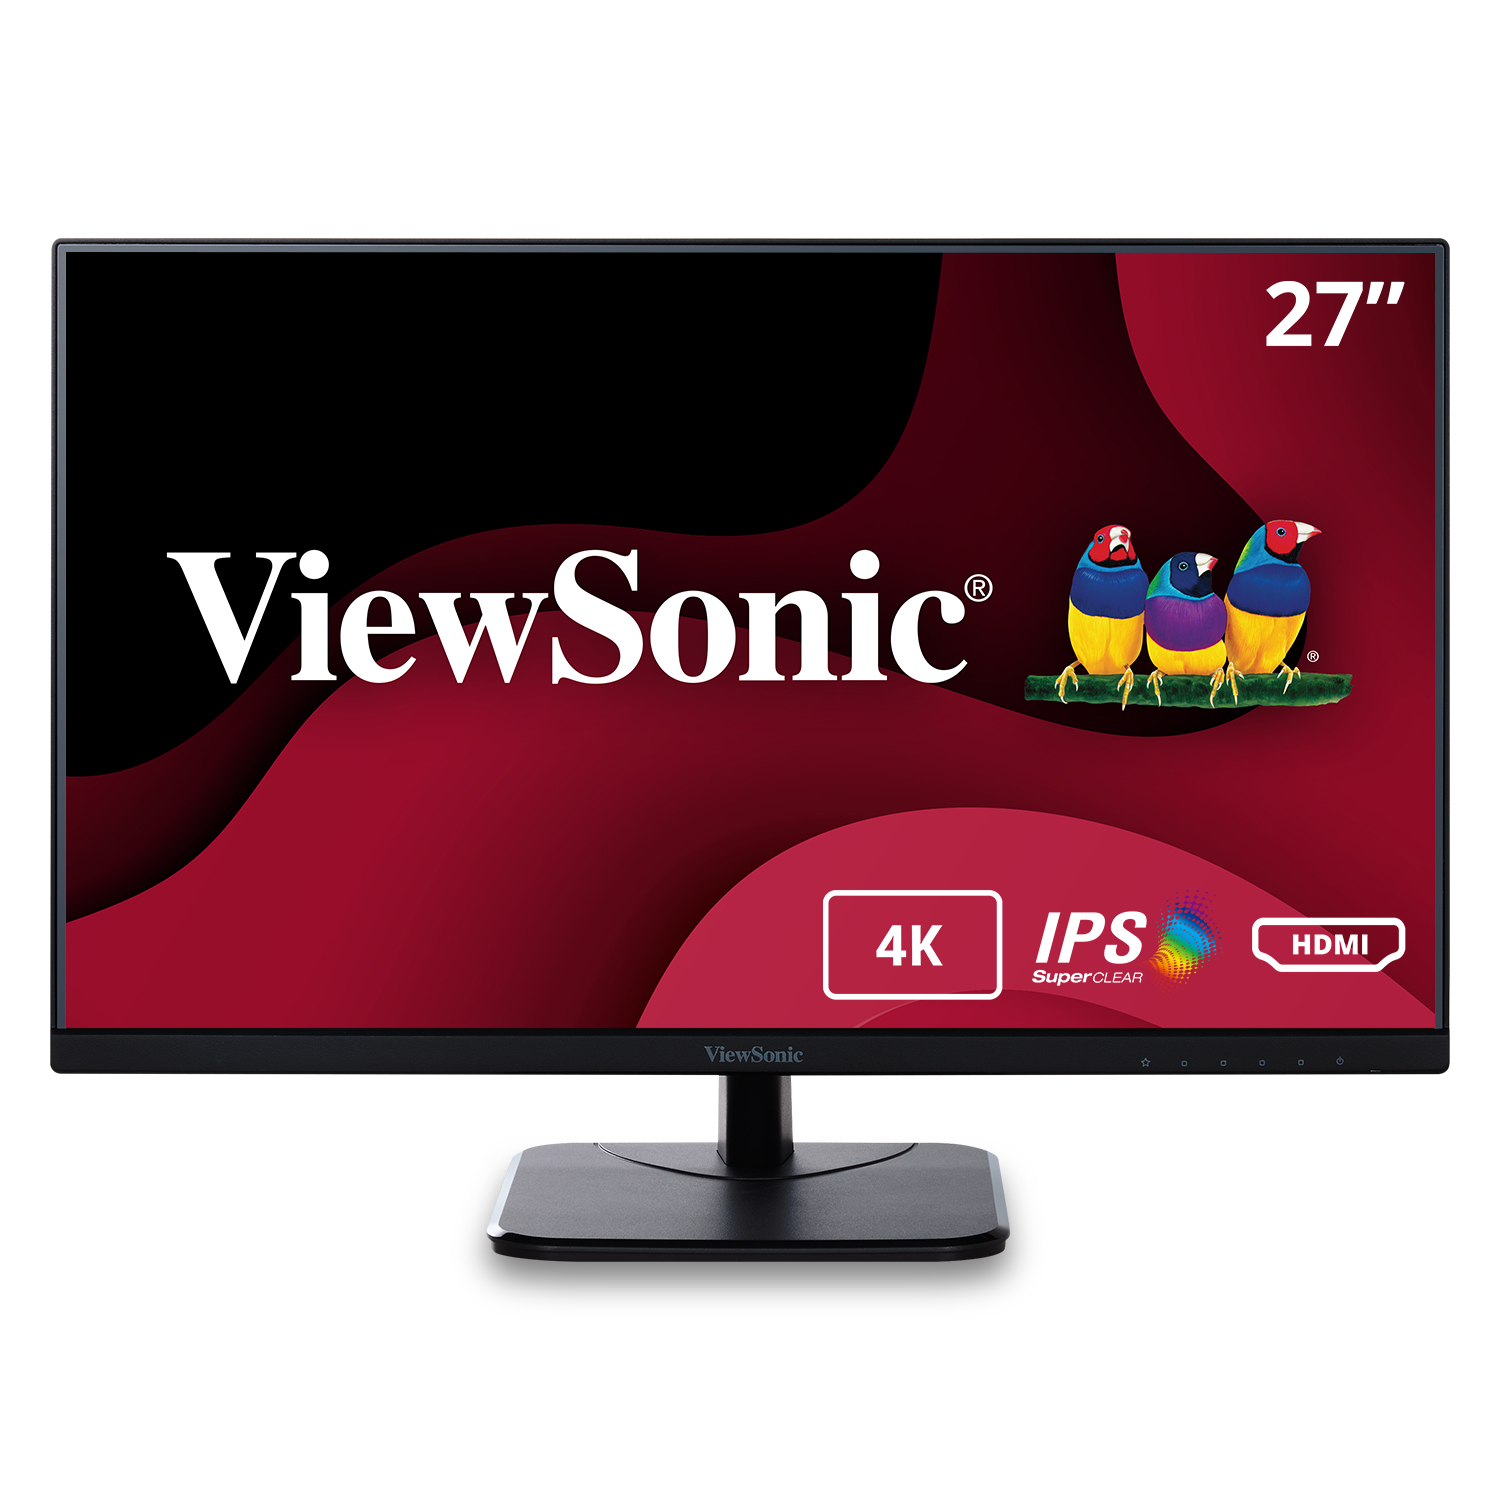 ViewSonic ELITE XG340C-2K - 1440p Curved Gaming Monitor 180Hz, FreeSync  Premium Pro, HDMI 2.1, USB-C - 550 cd/m² - 34